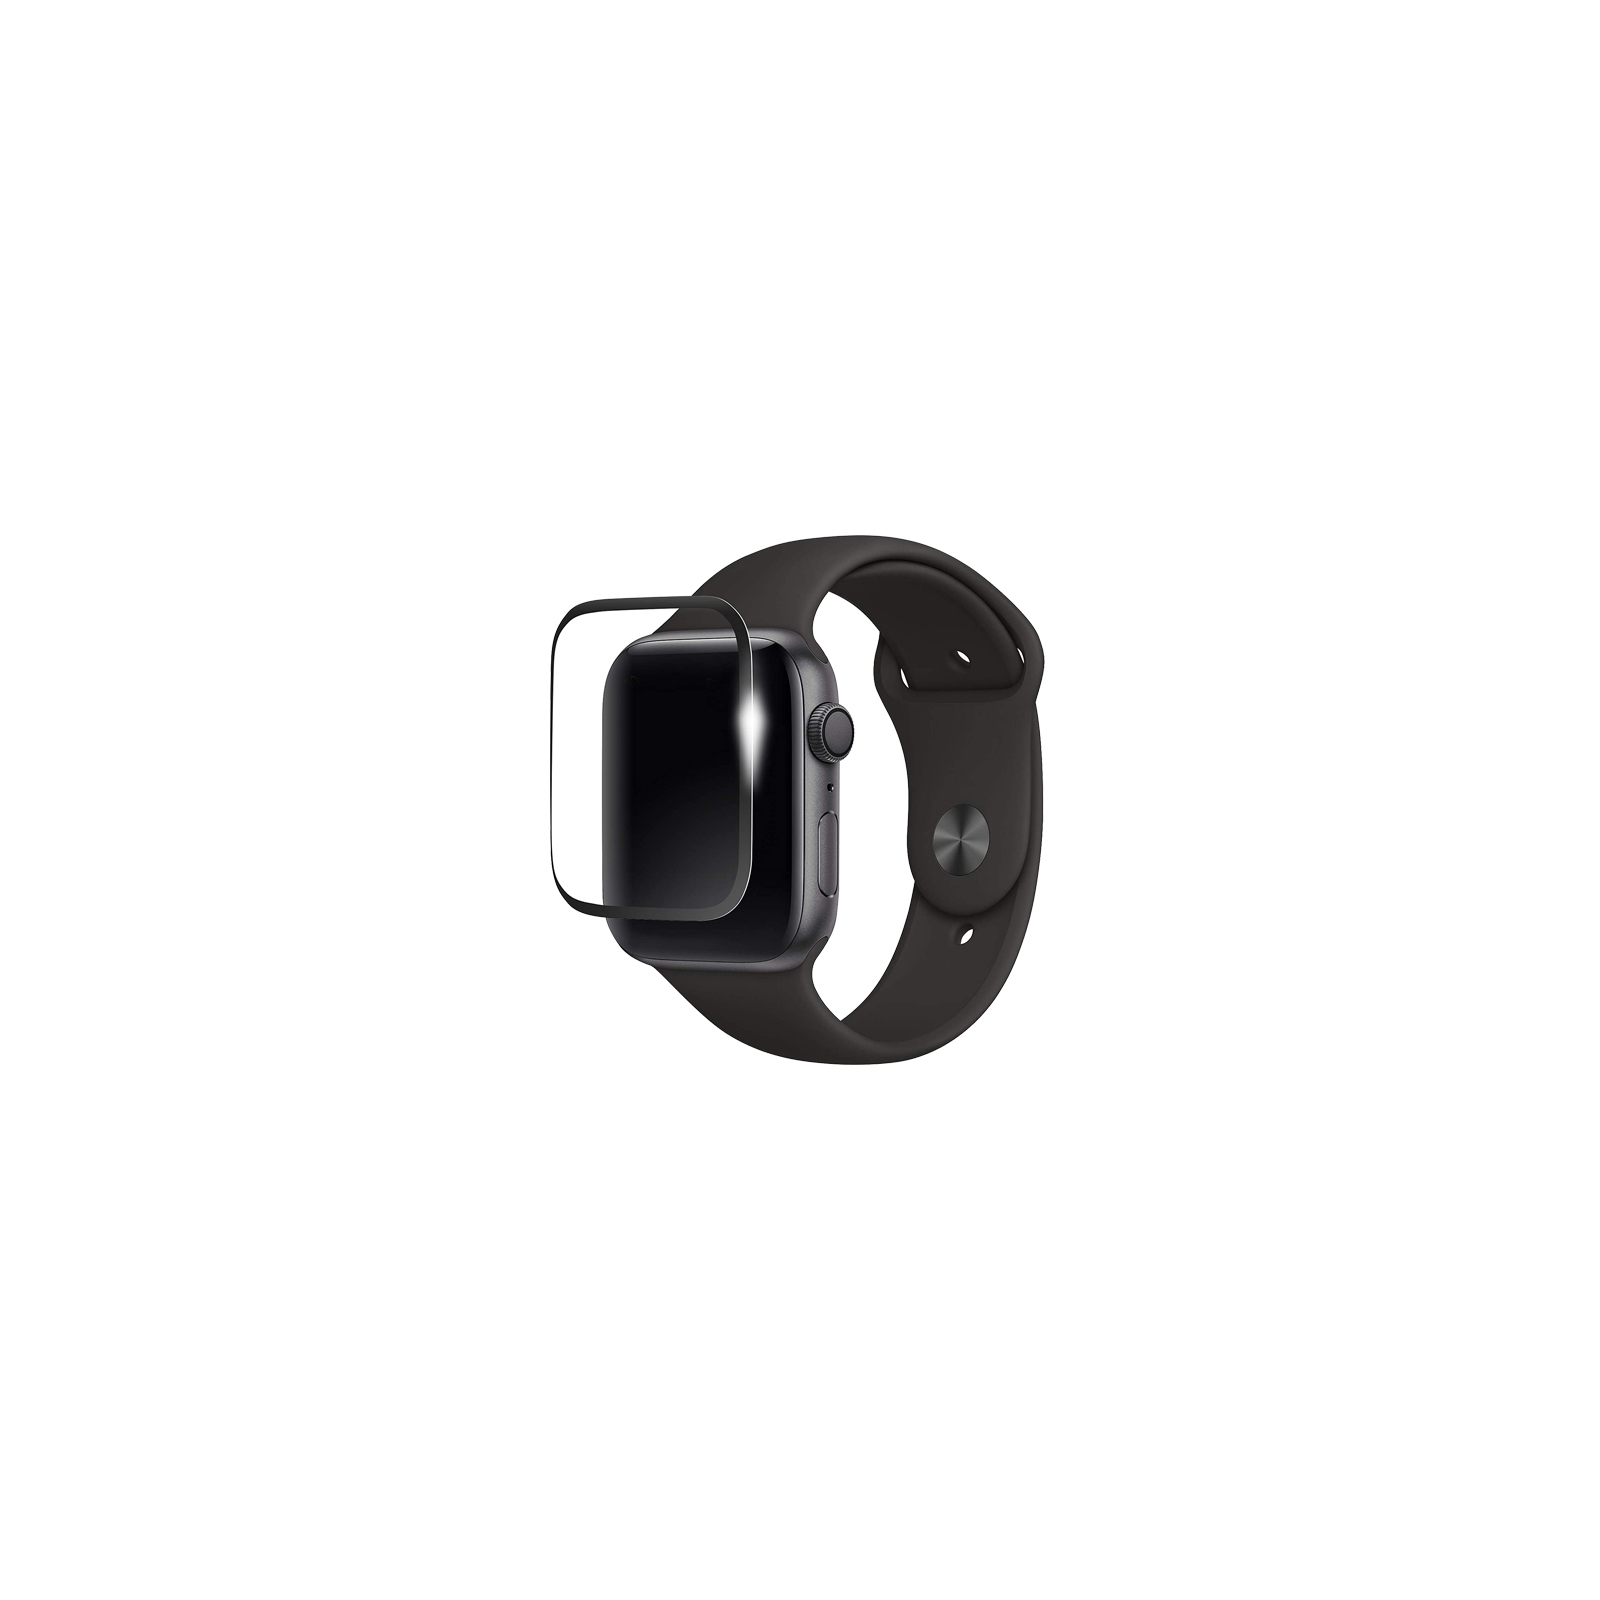 BodyGuardz PRTX Apple Watch 2/3 Black/Clear Screen Protector Brand New